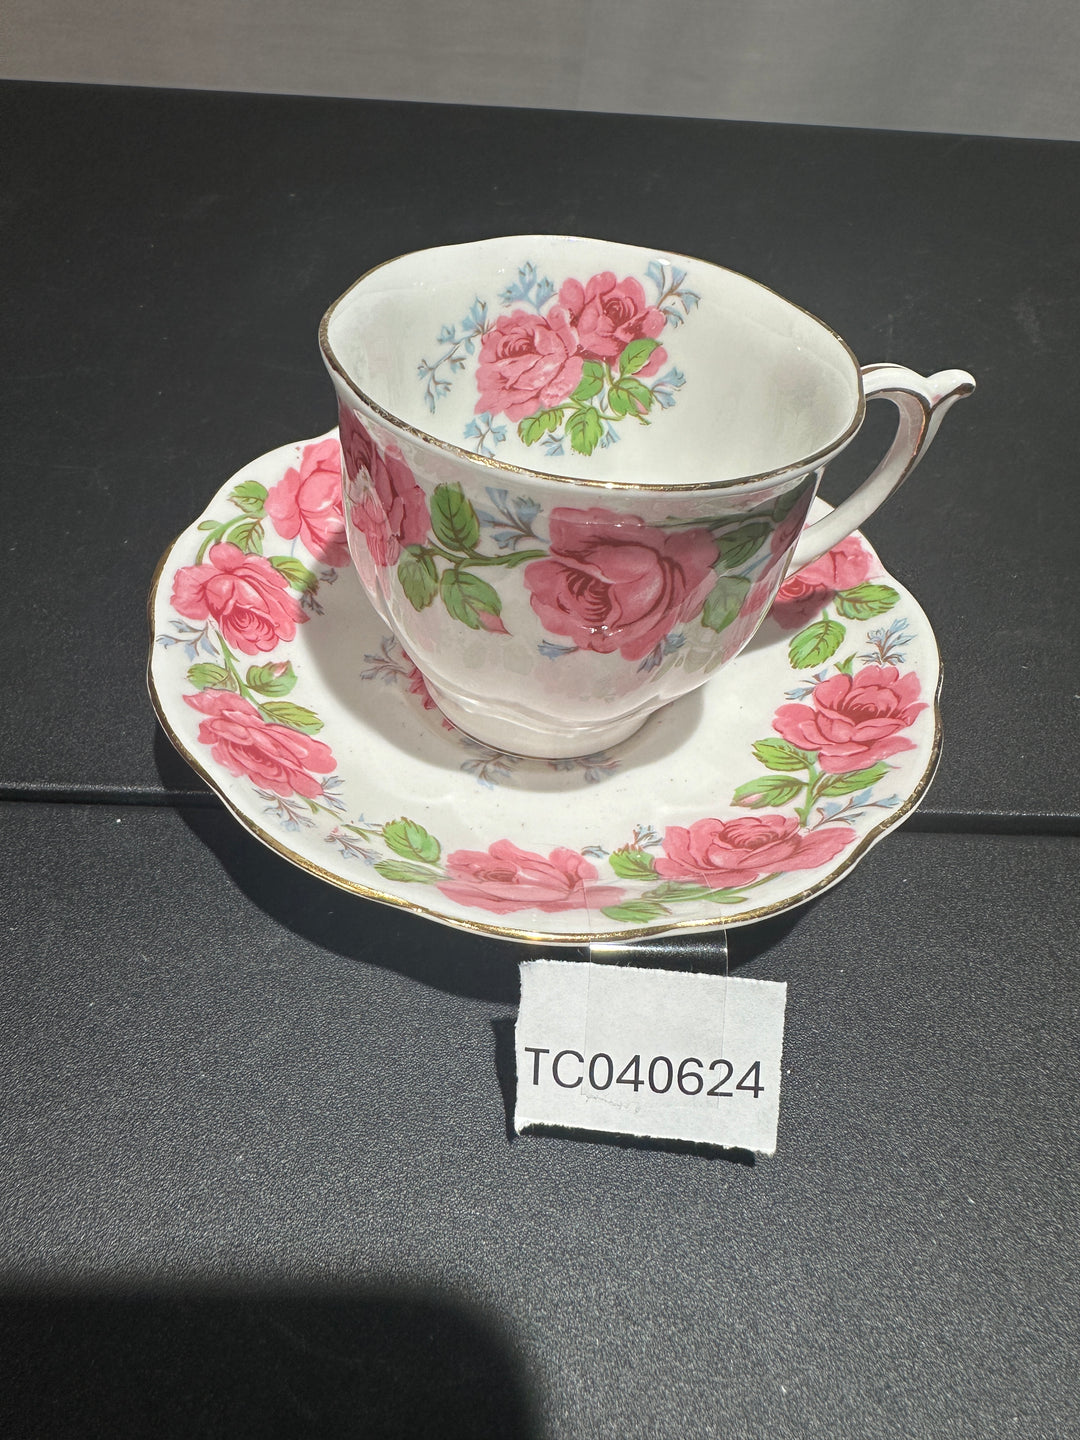 Tea Cup TC040624